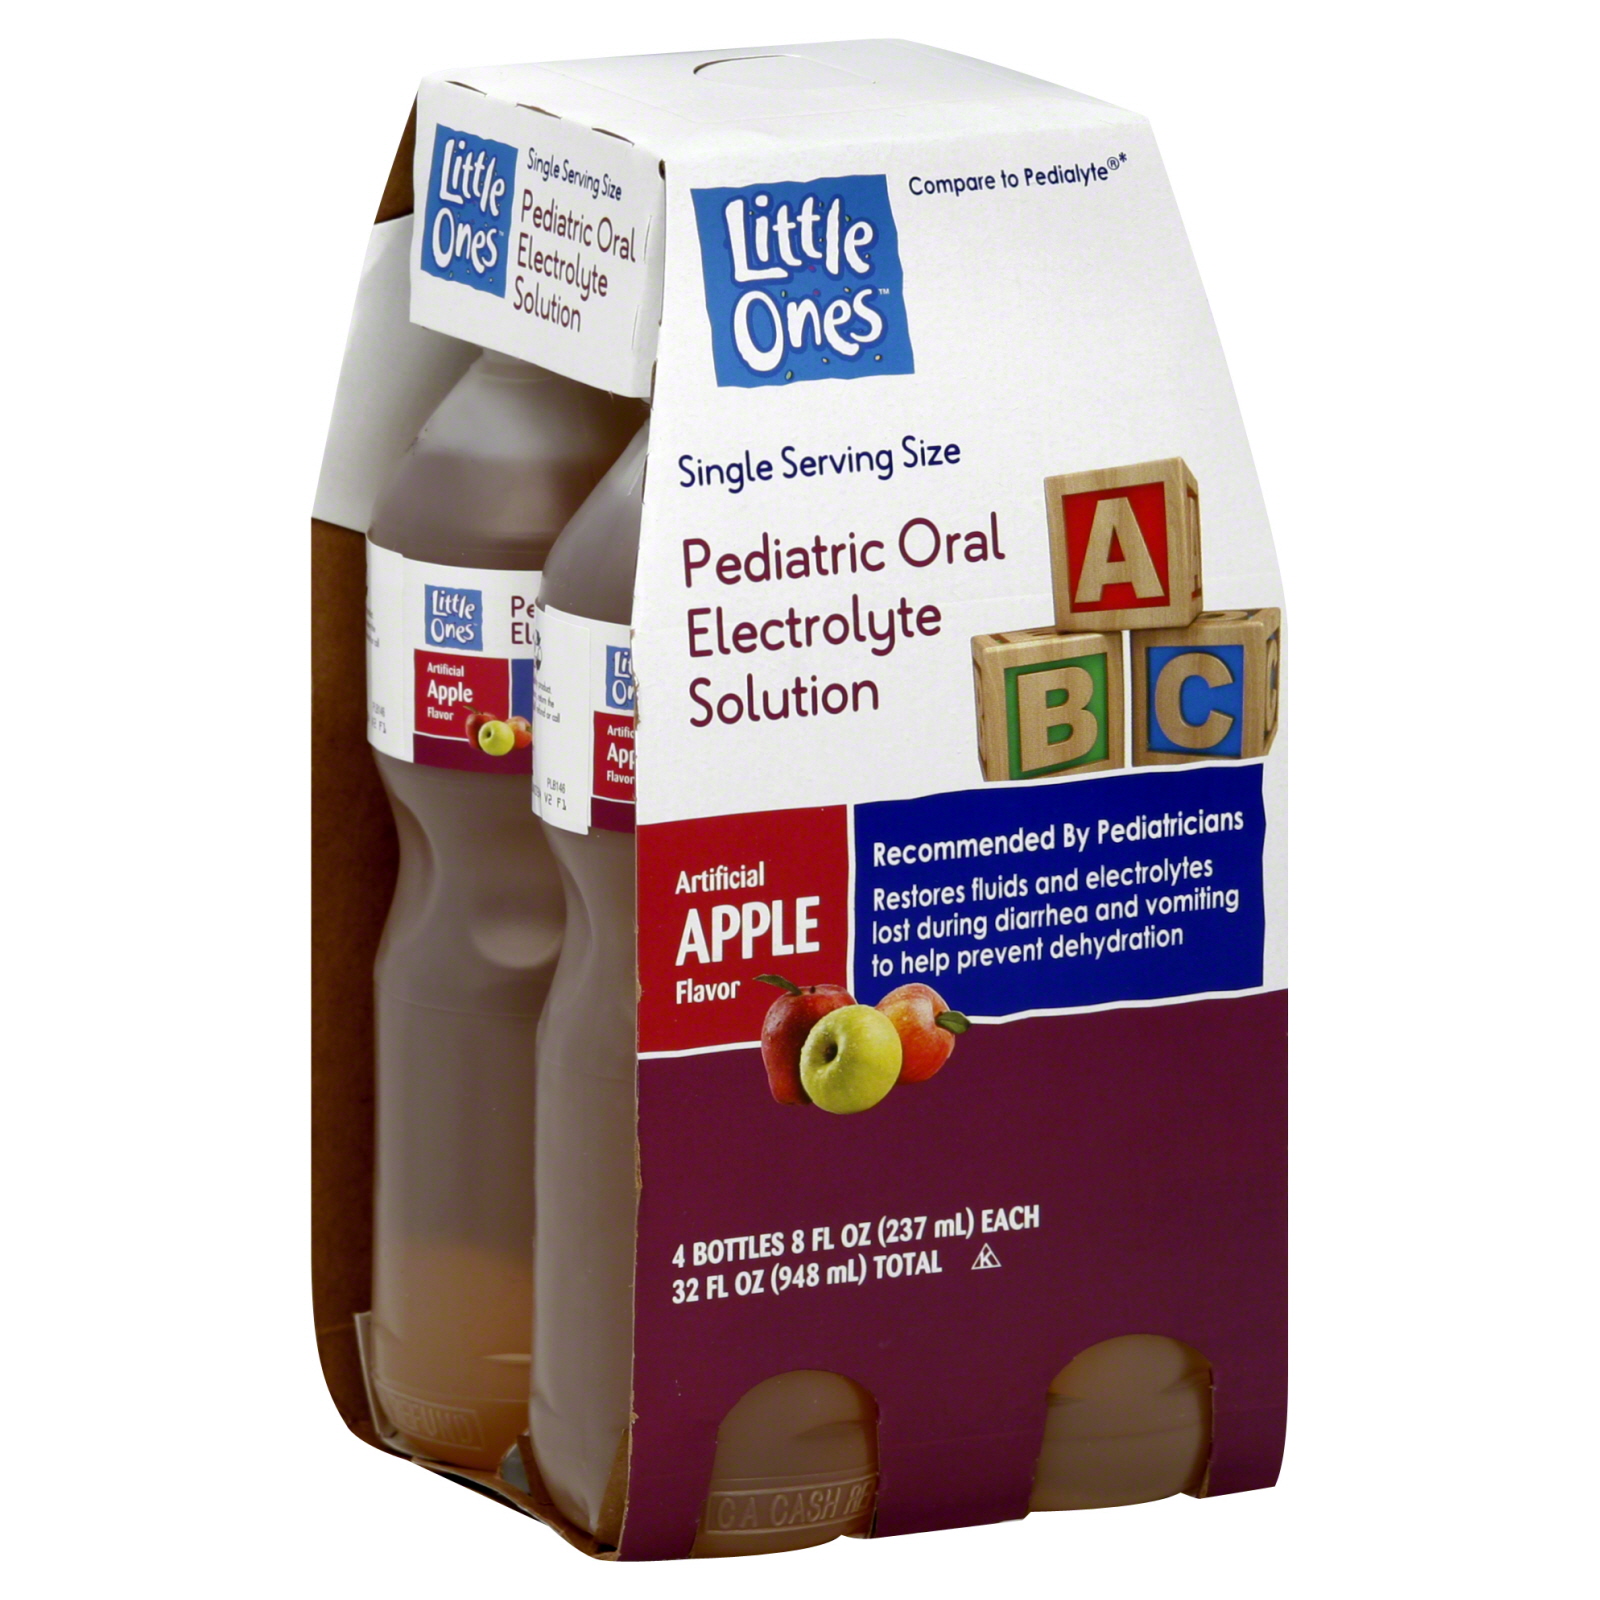 Little Ones Electrolyte Solution, Pediatric Oral, Apple Flavor 4 - 8 fl oz (237 ml) bottles [32 fl oz (948 ml)]